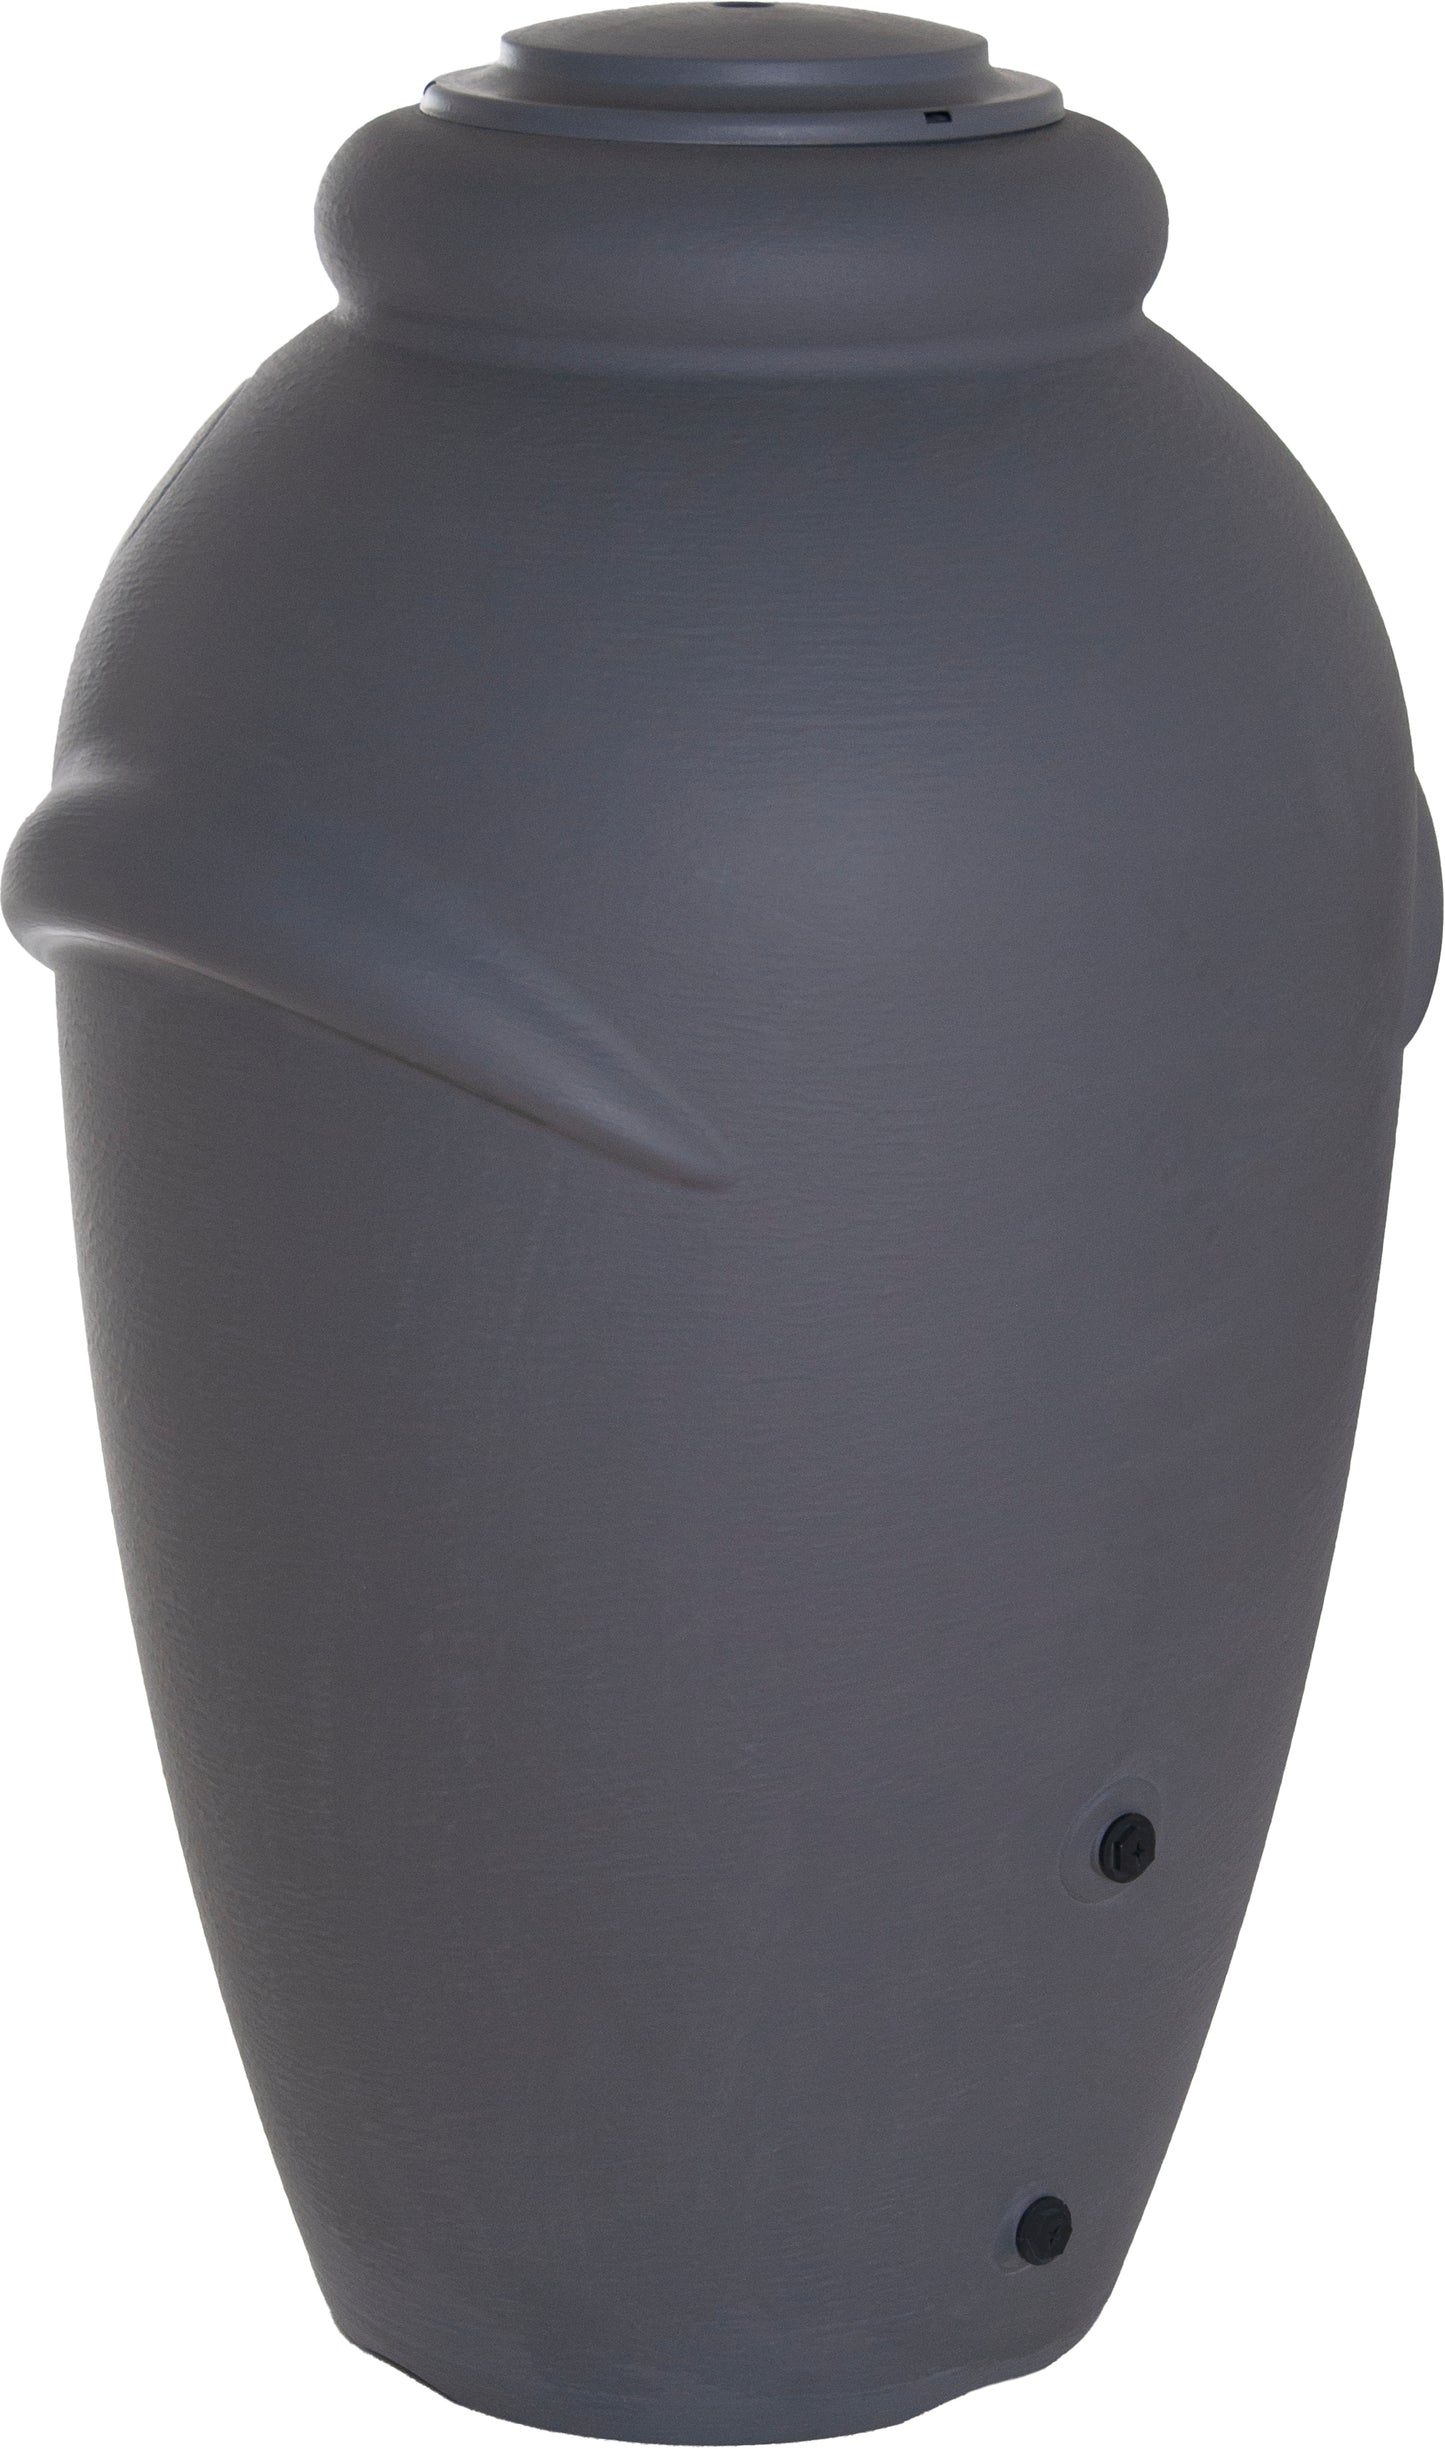 Rainwater barrel 360l gray with lid 